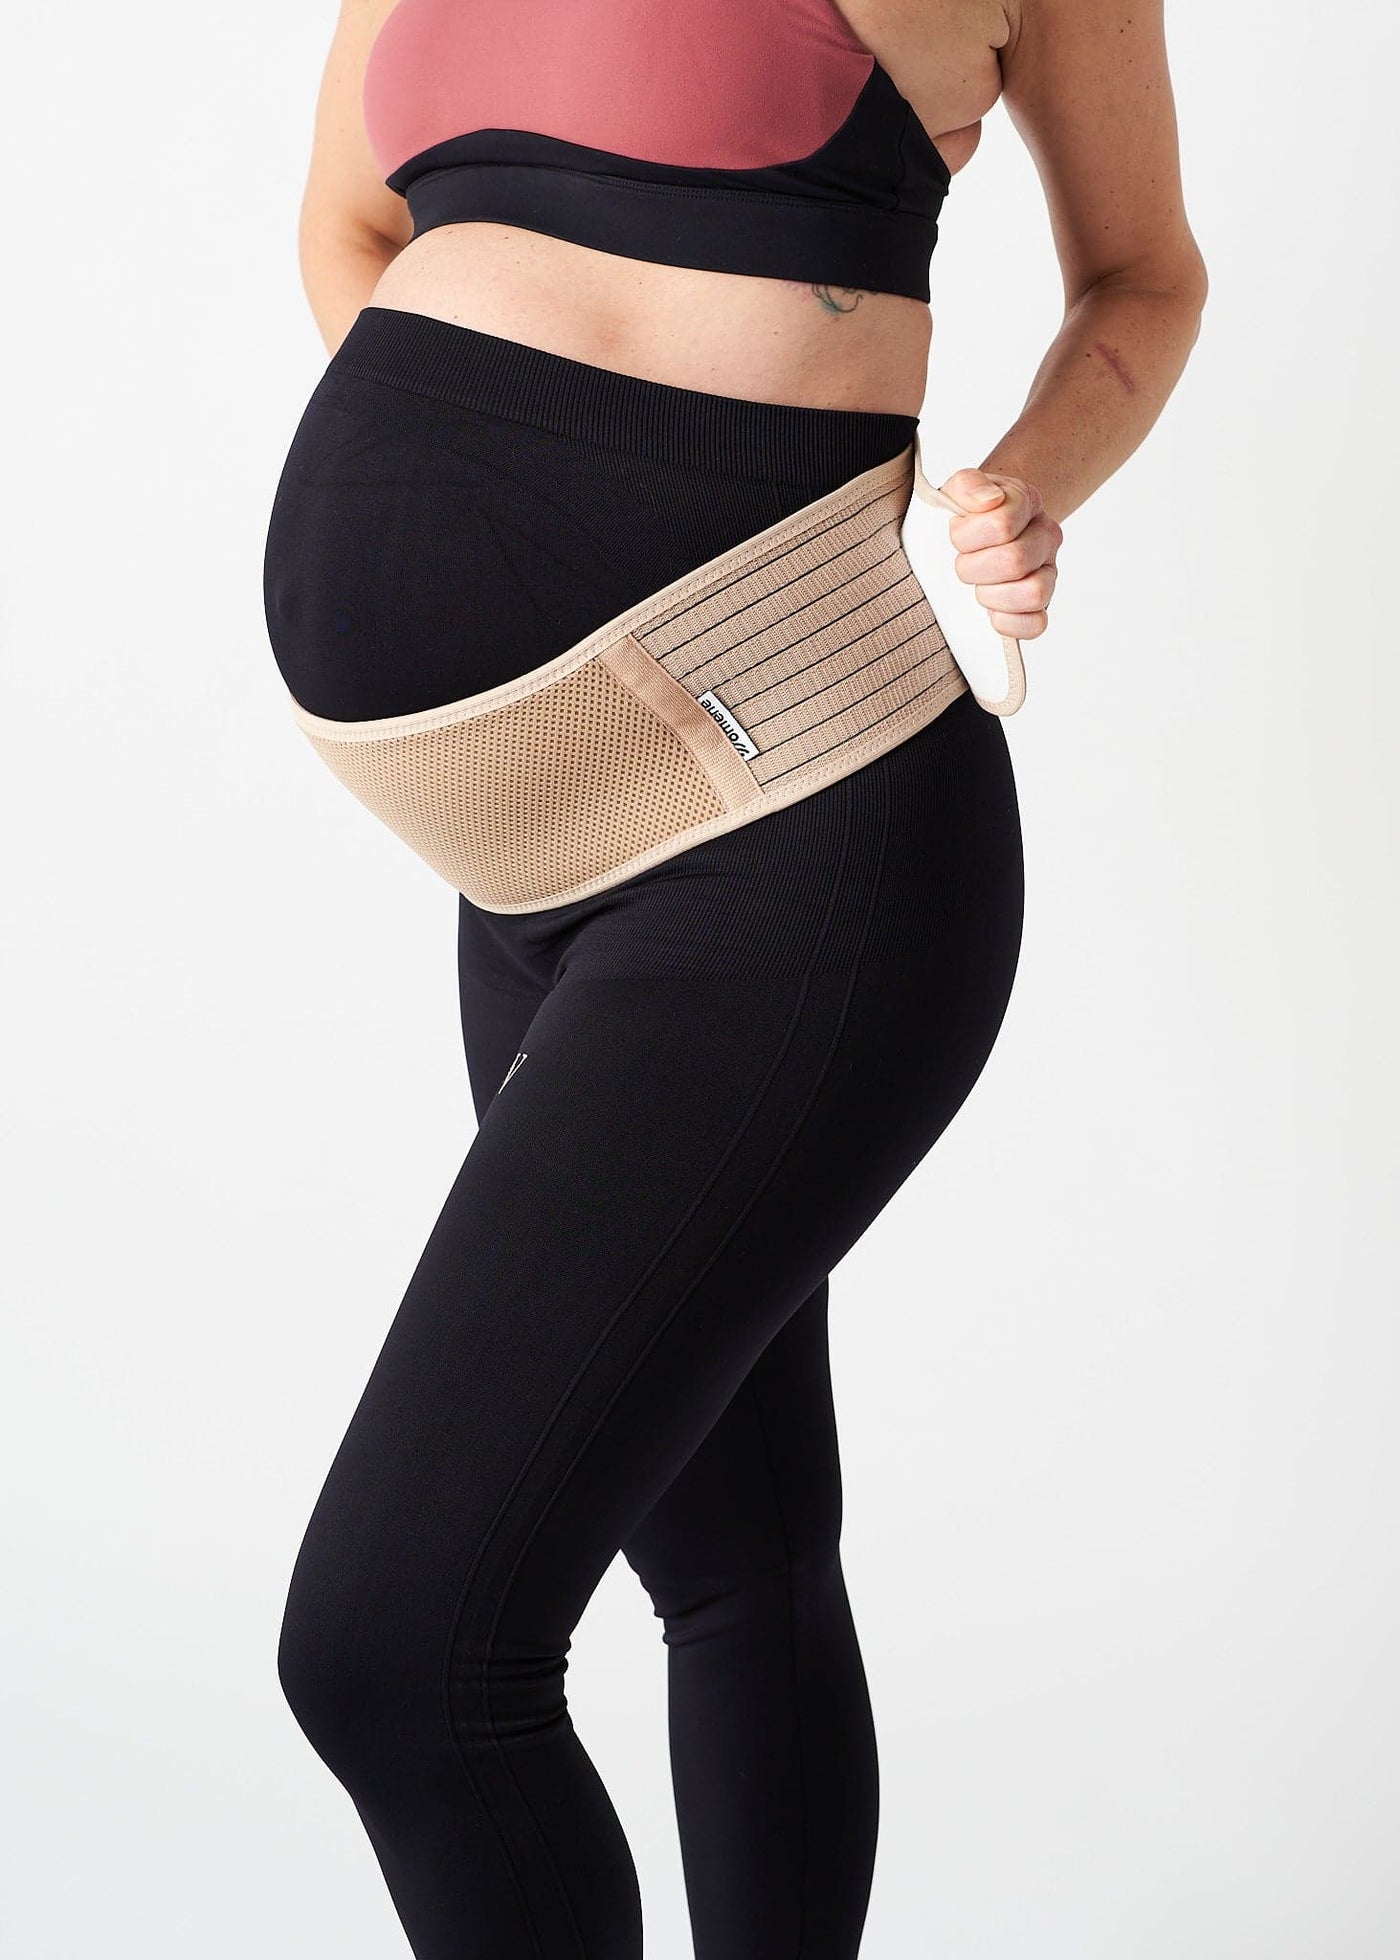 Maternity pregnancy belt